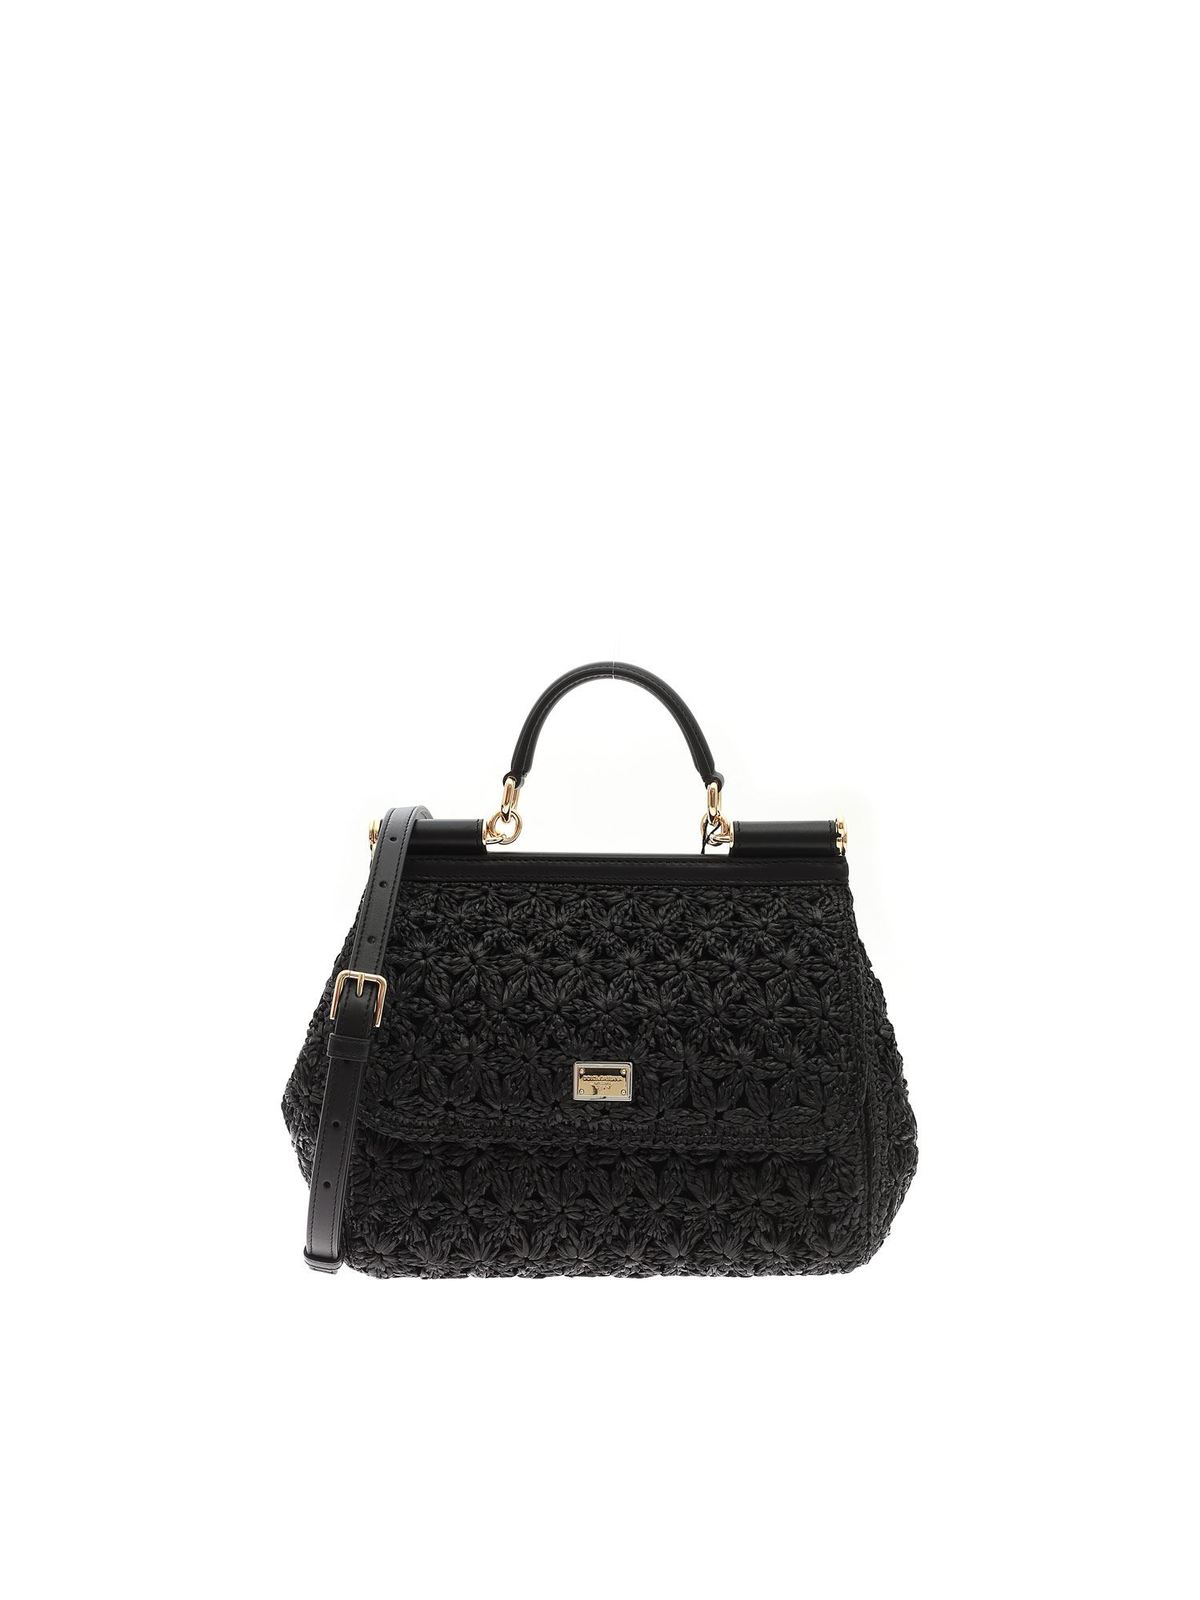 Dolce & Gabbana My Heart Crochet Bag in Black